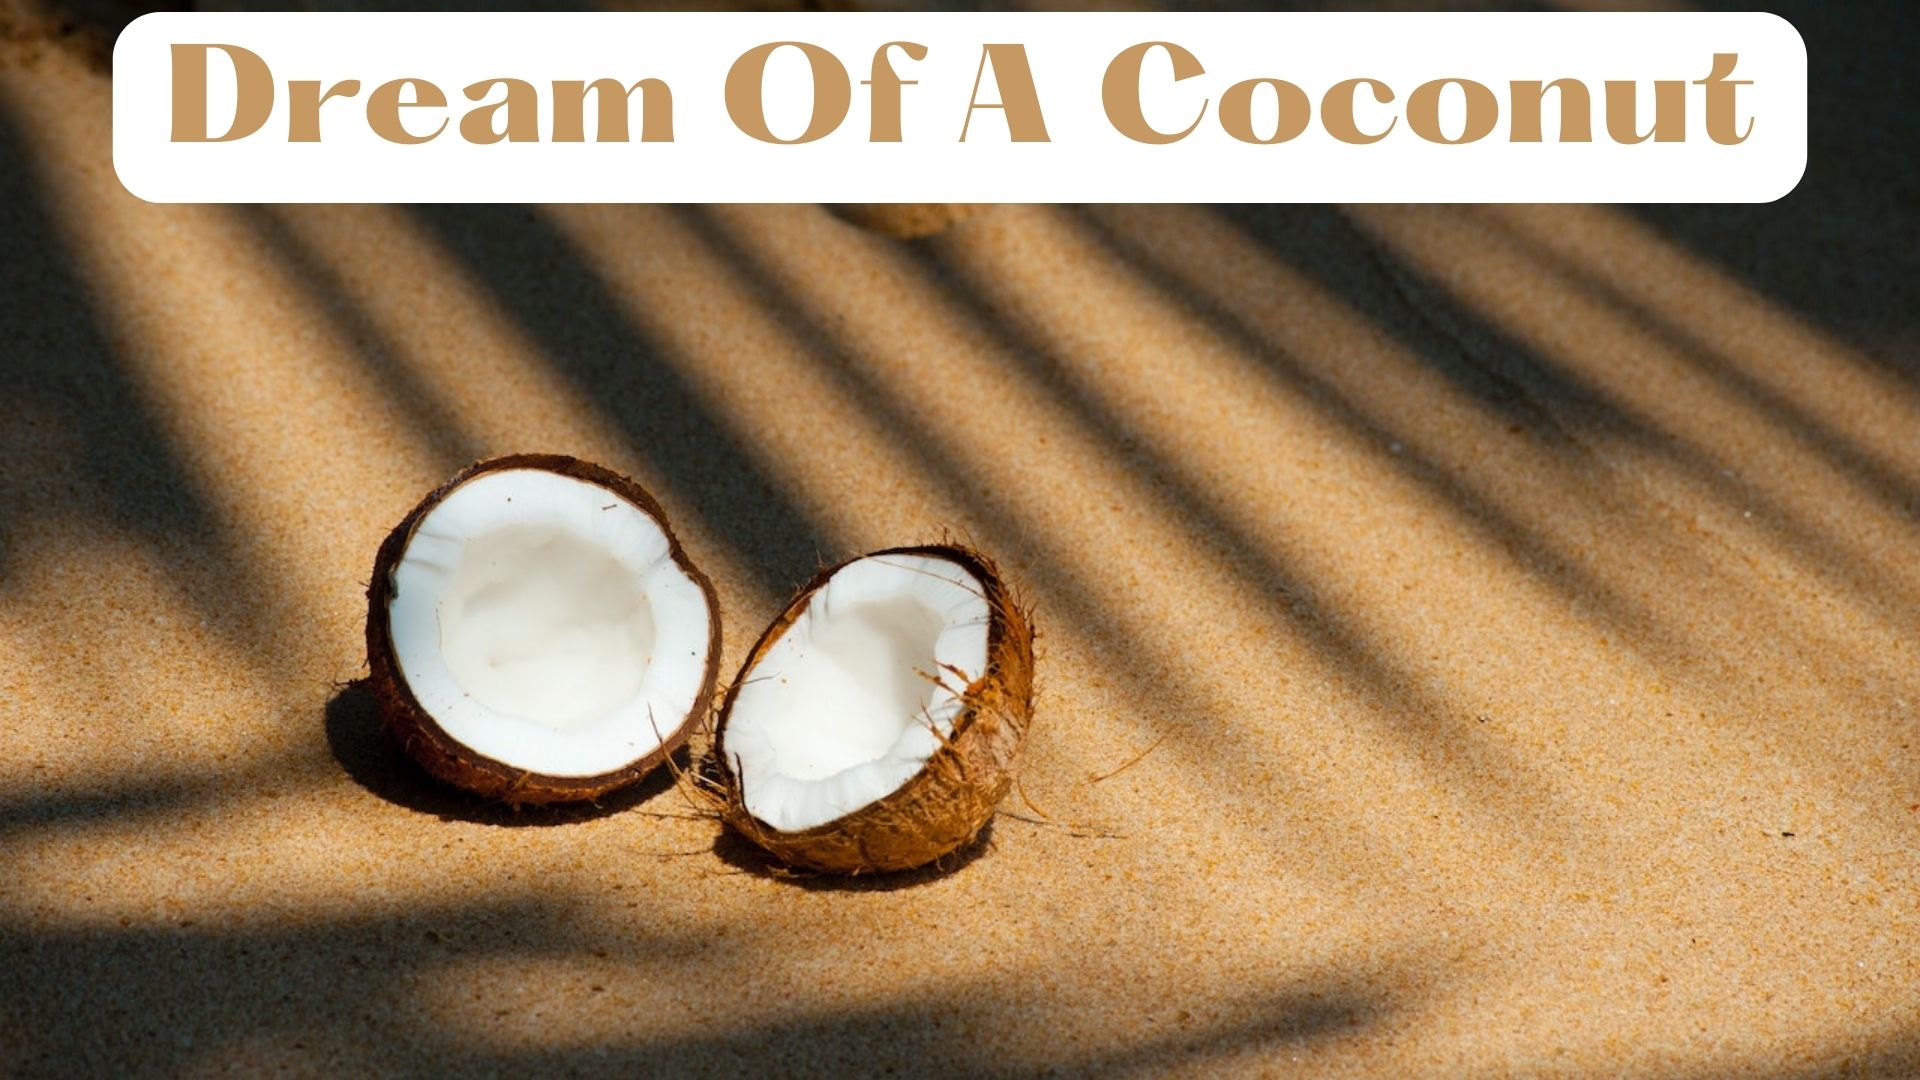 Dream Of A Coconut - Indicate Prosperity, Abundance, And Success